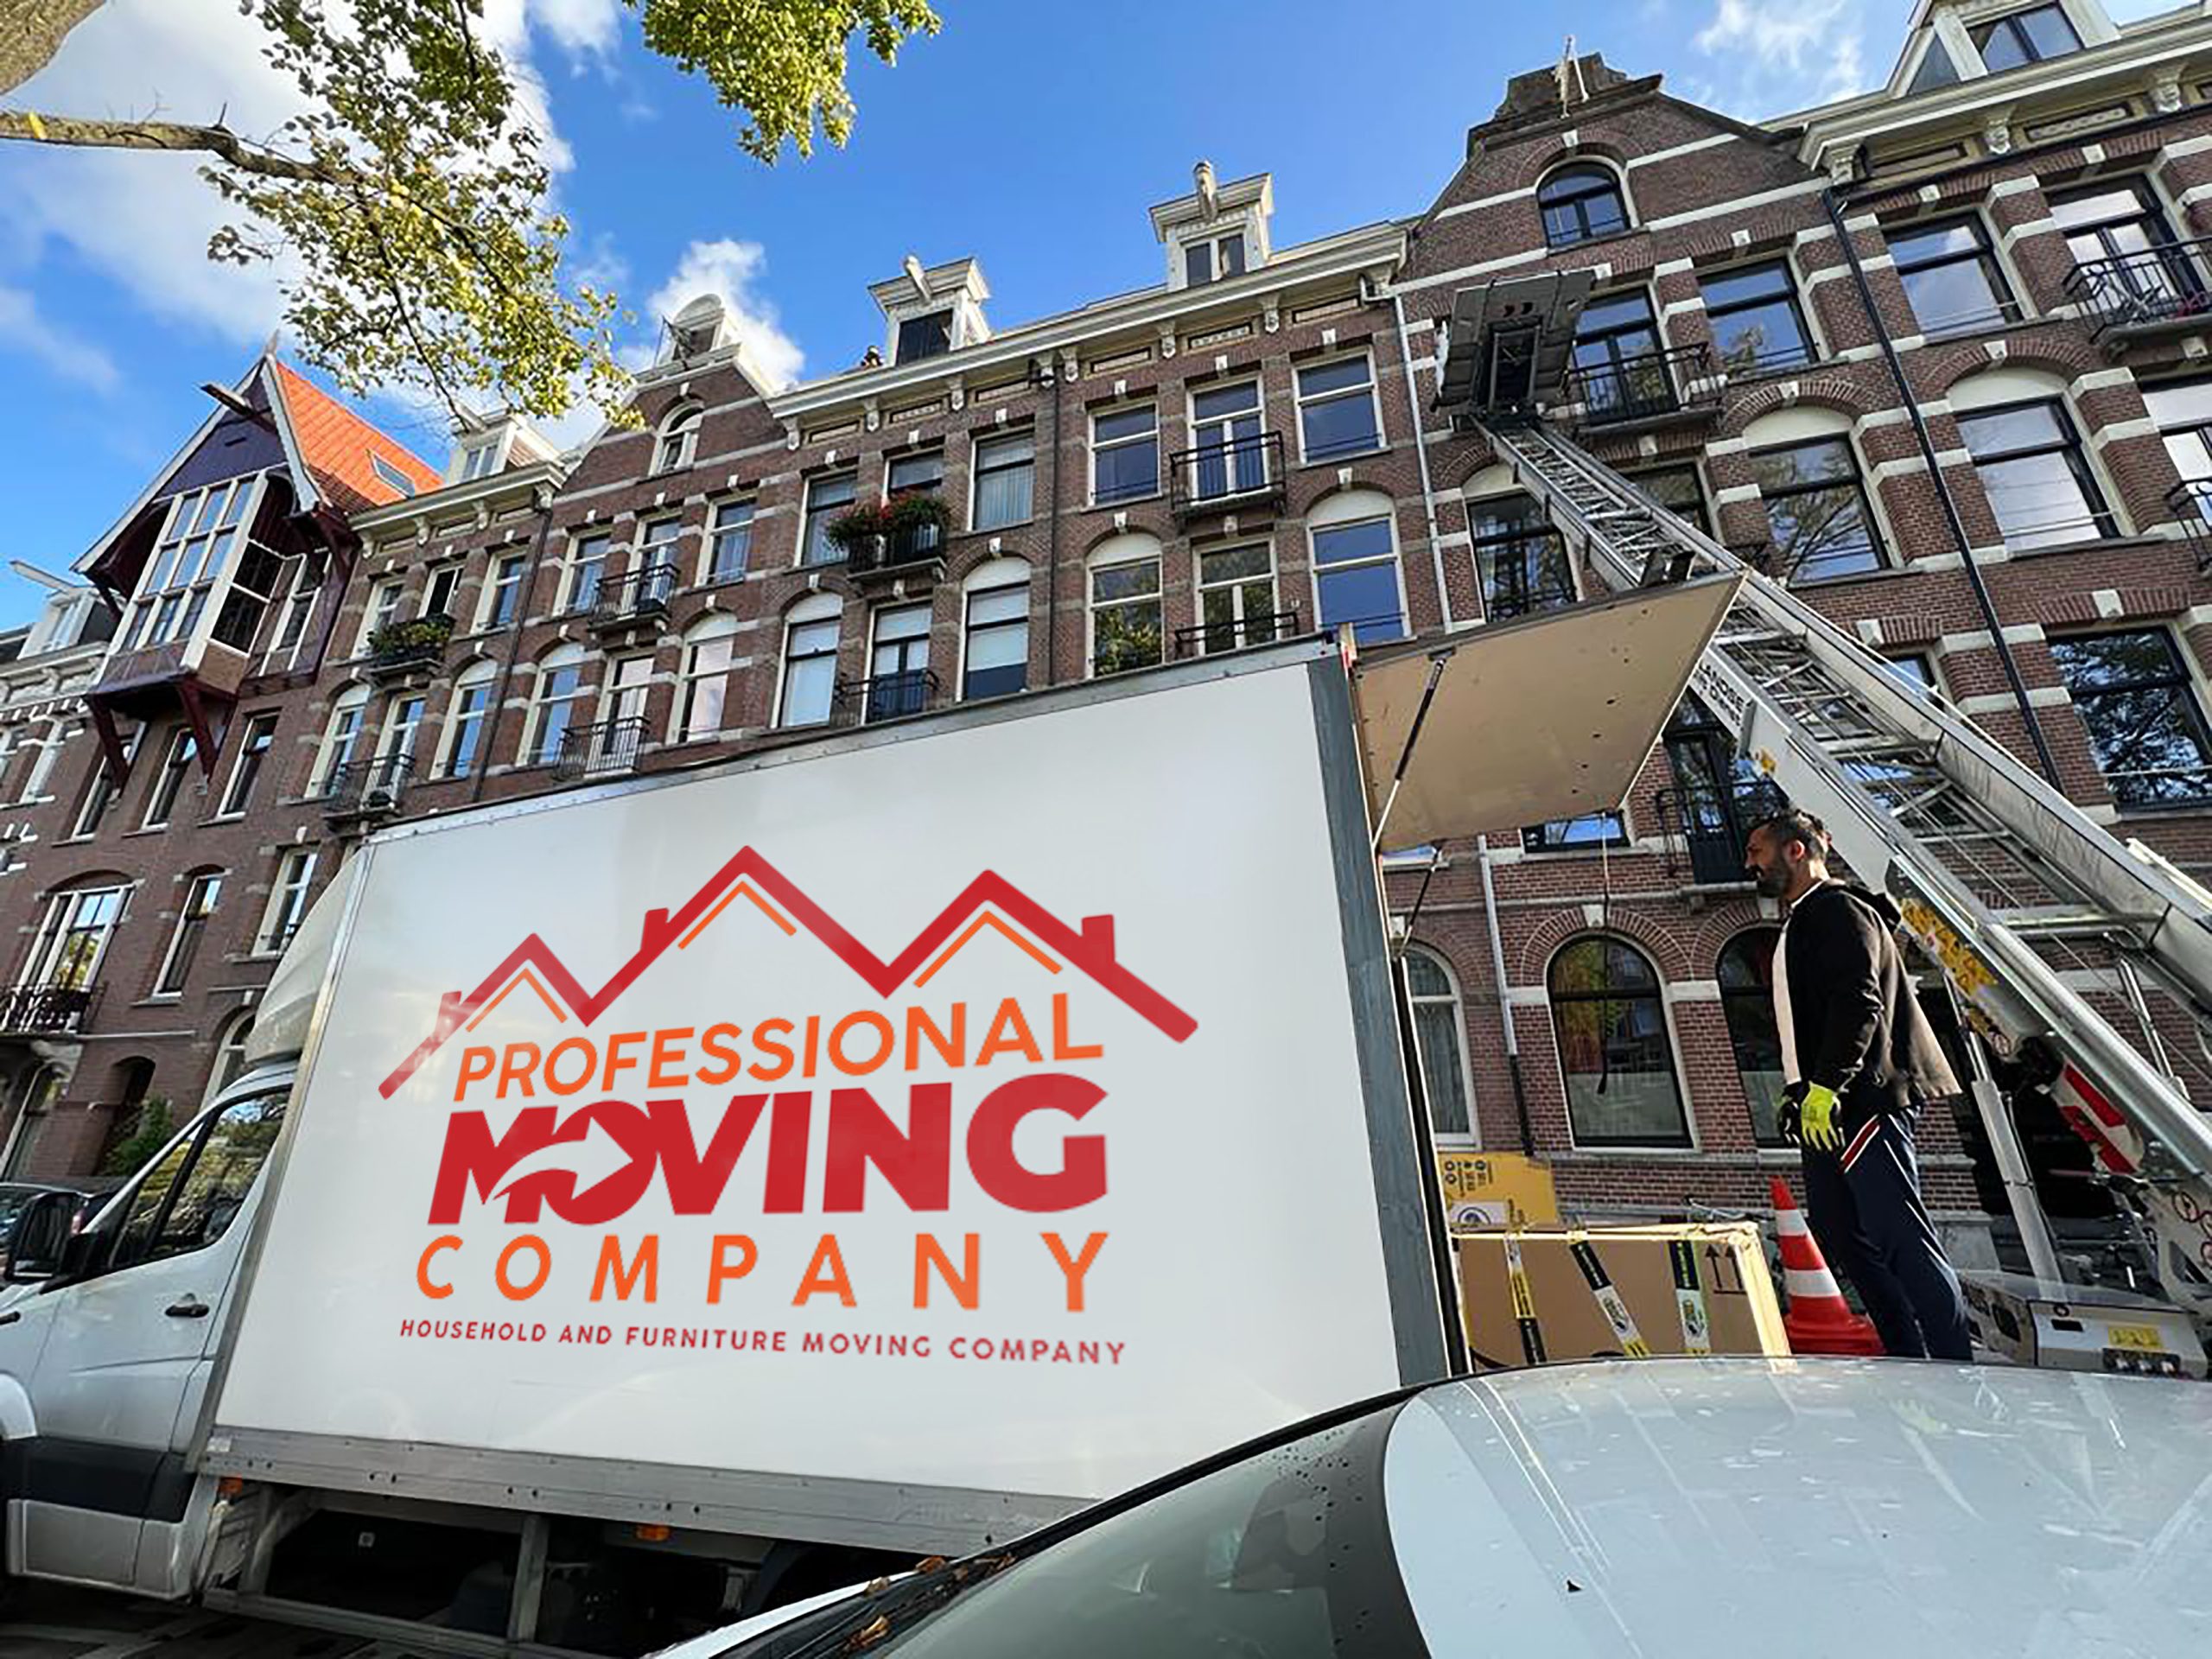 Professional Moving Company Amsterdam